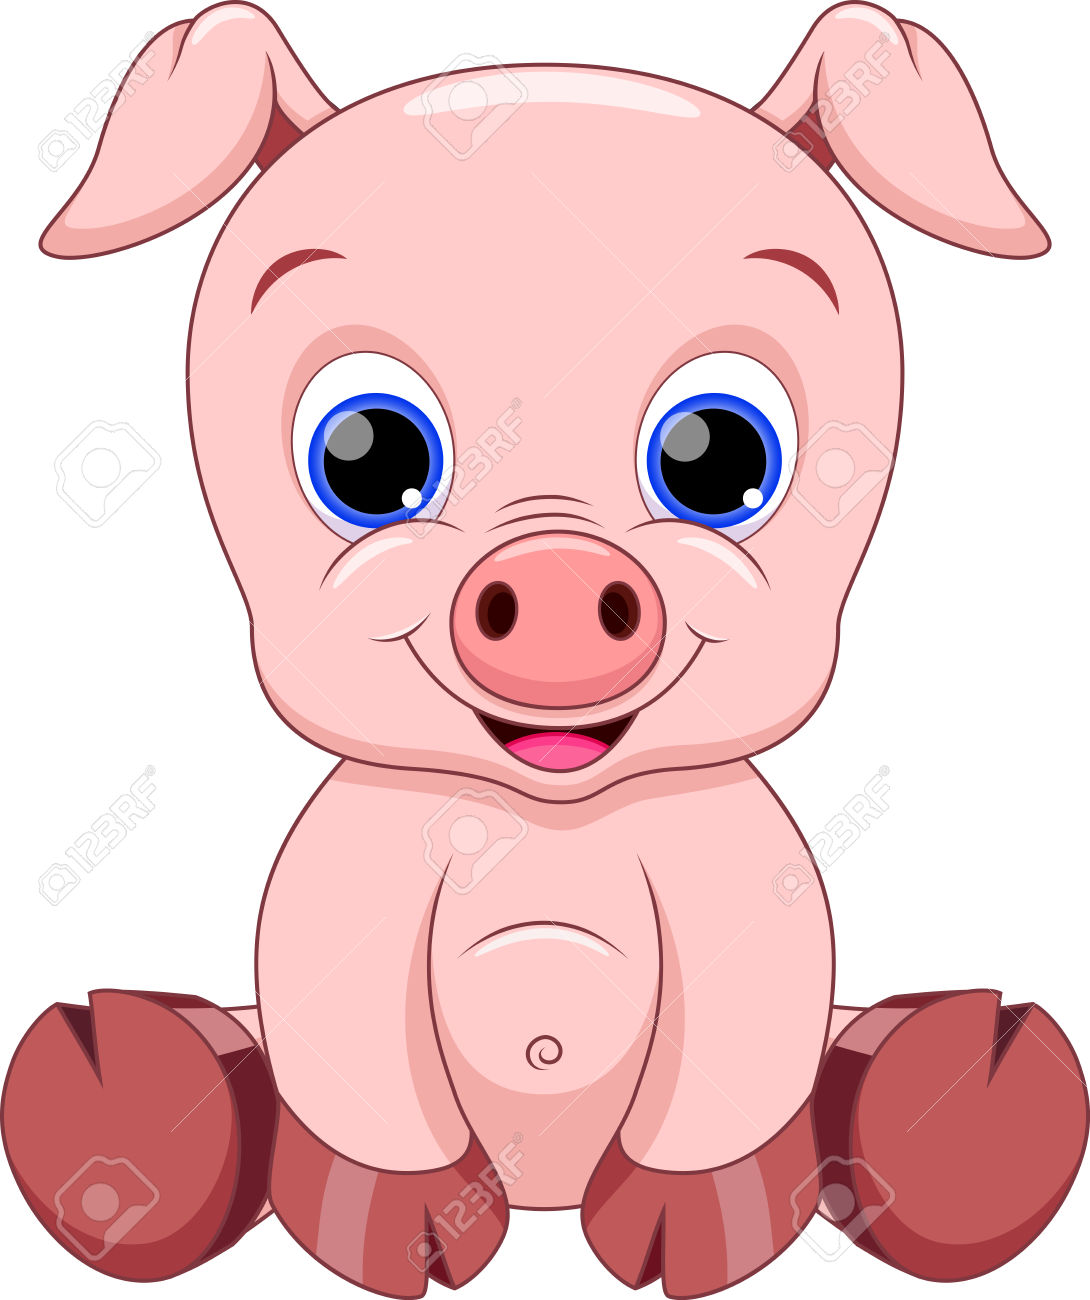 Free pig clip art from mycutegraphics.com.